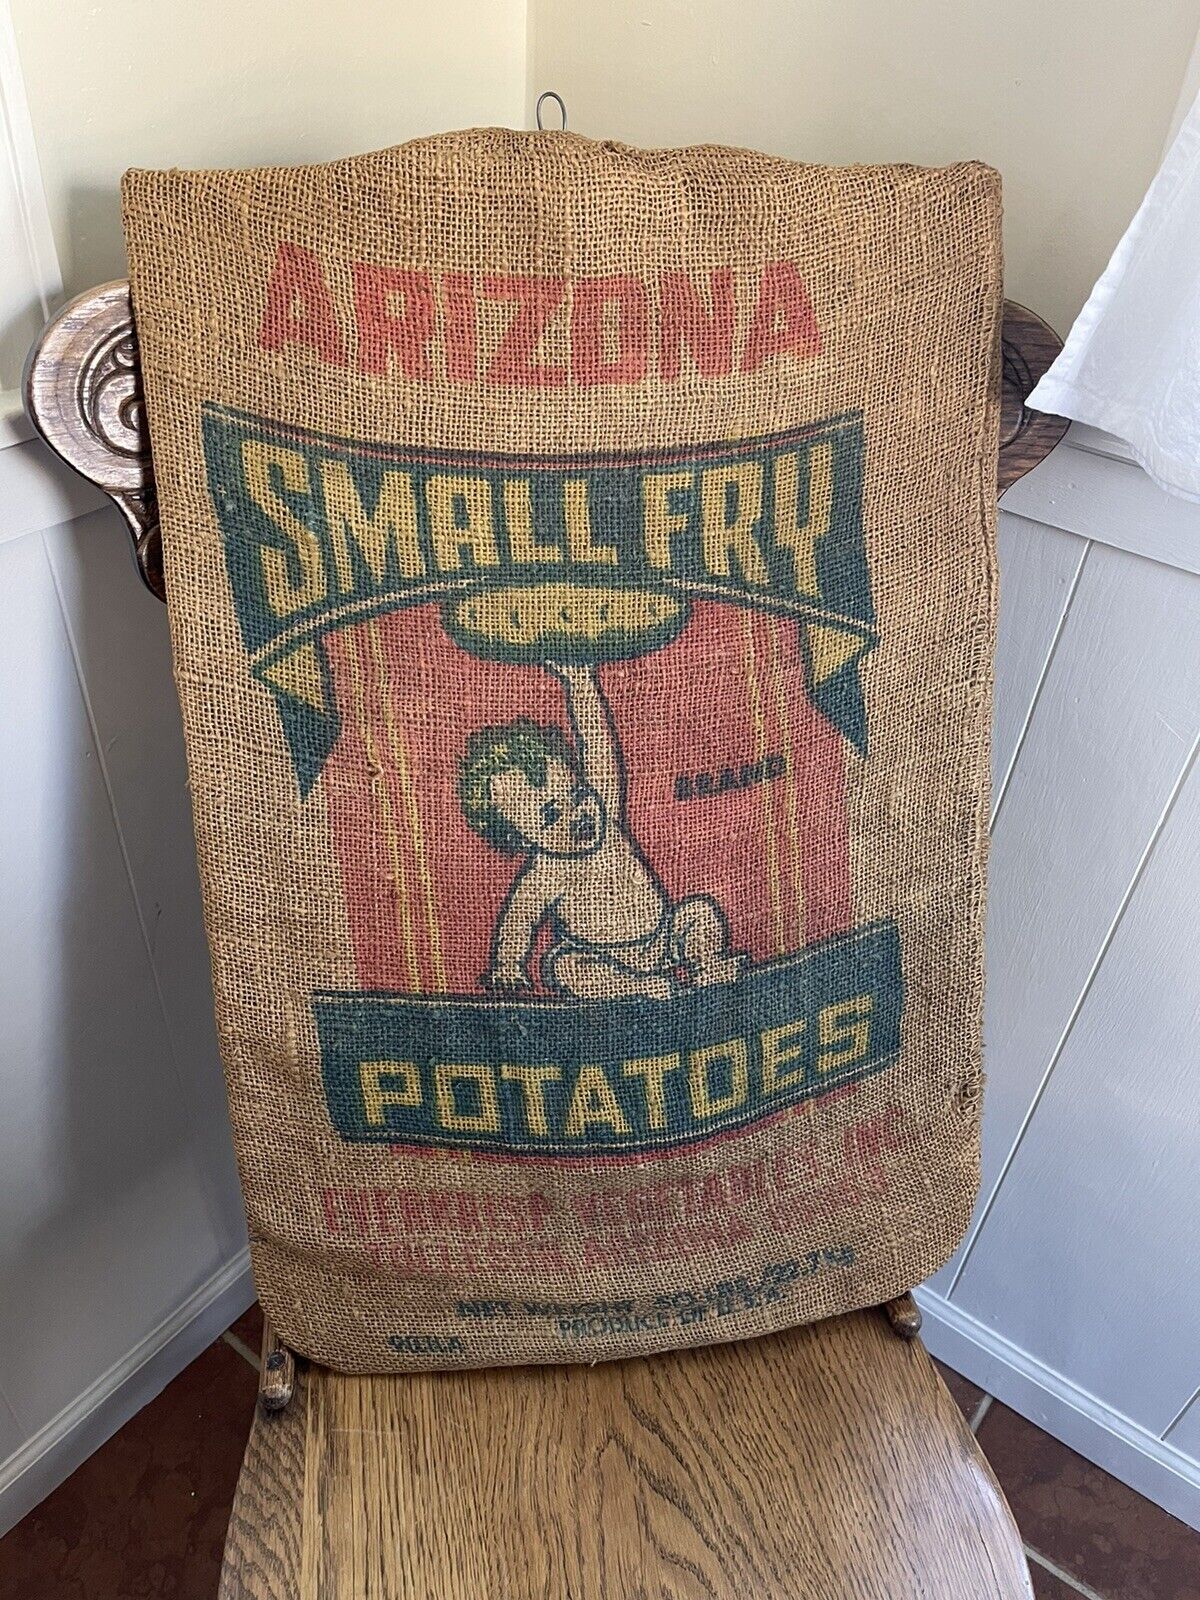 Vintage Advertising Burlap Bag Small Fry Potatoes Arizona Wasco Peters & Sons